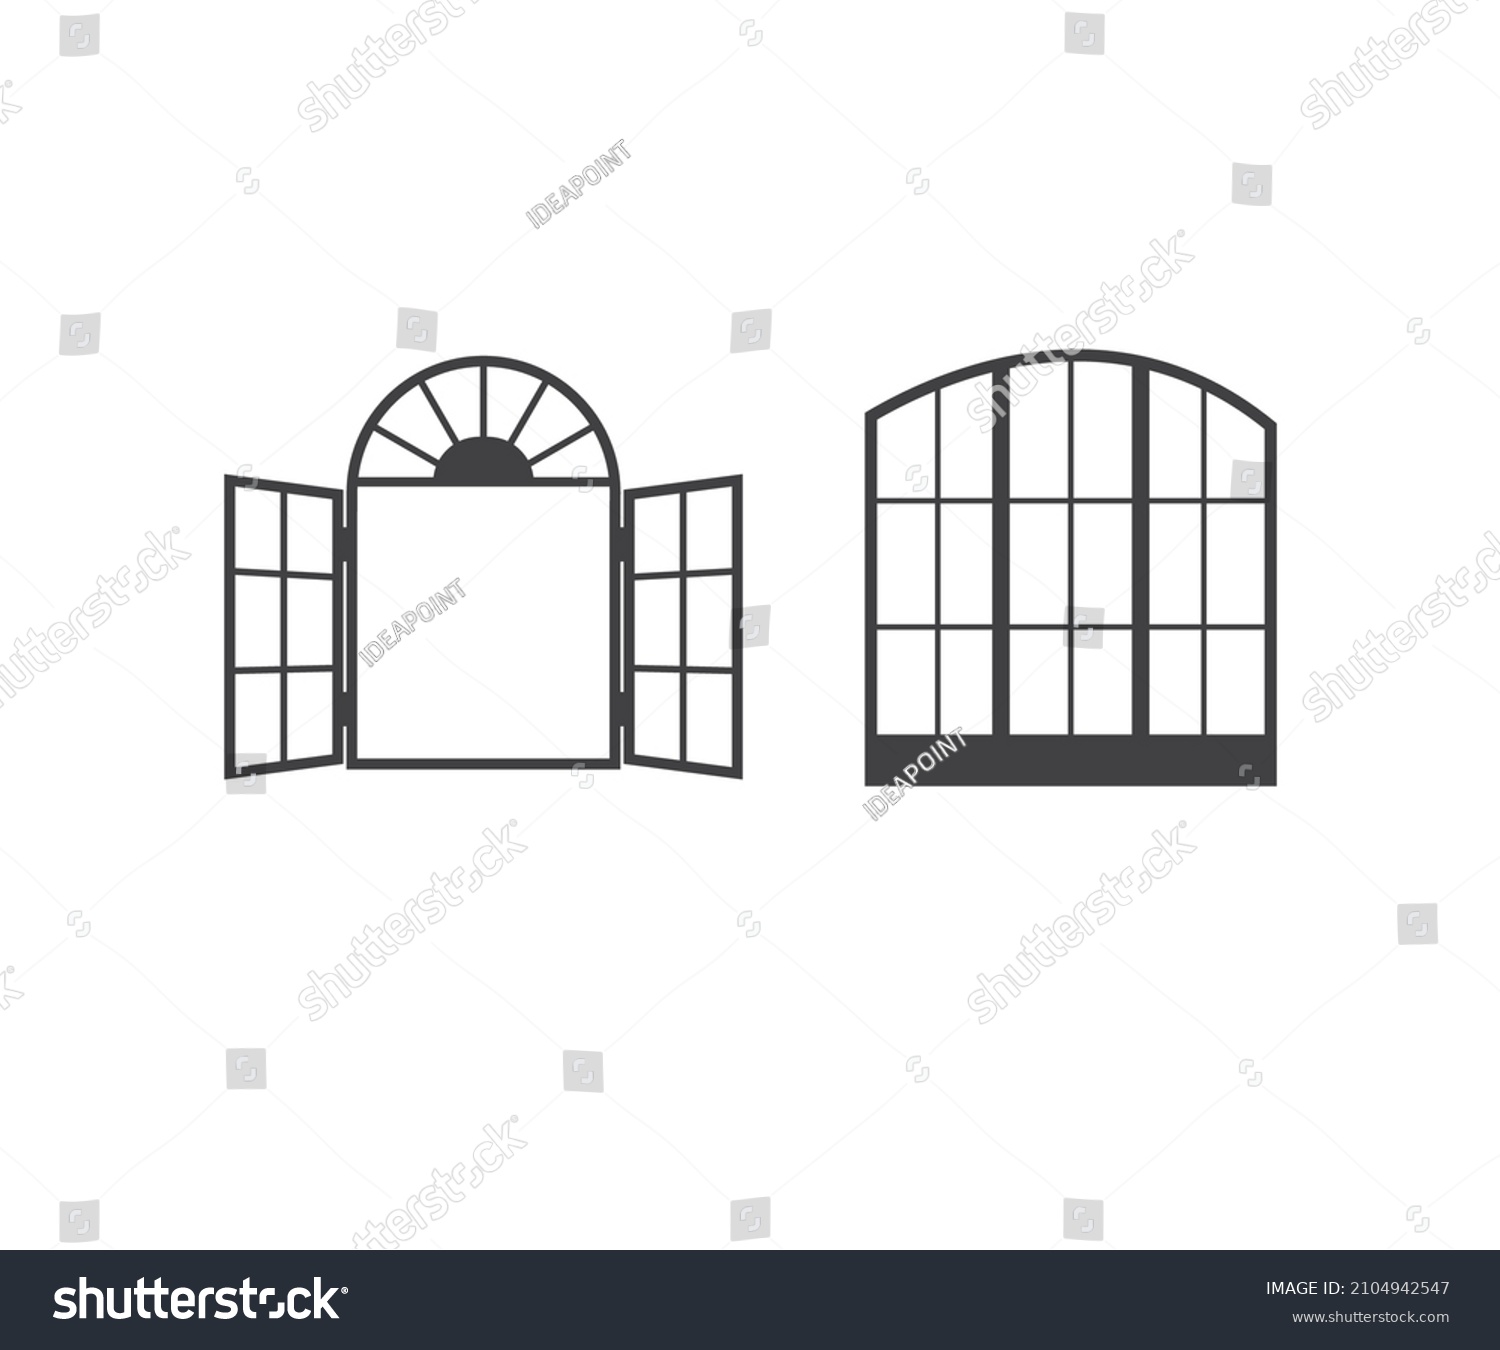 SVG of  Window Frame Casement svg, Window File For Cricut, Windows Vector, Windows Clipart, Windows Silhouette svg